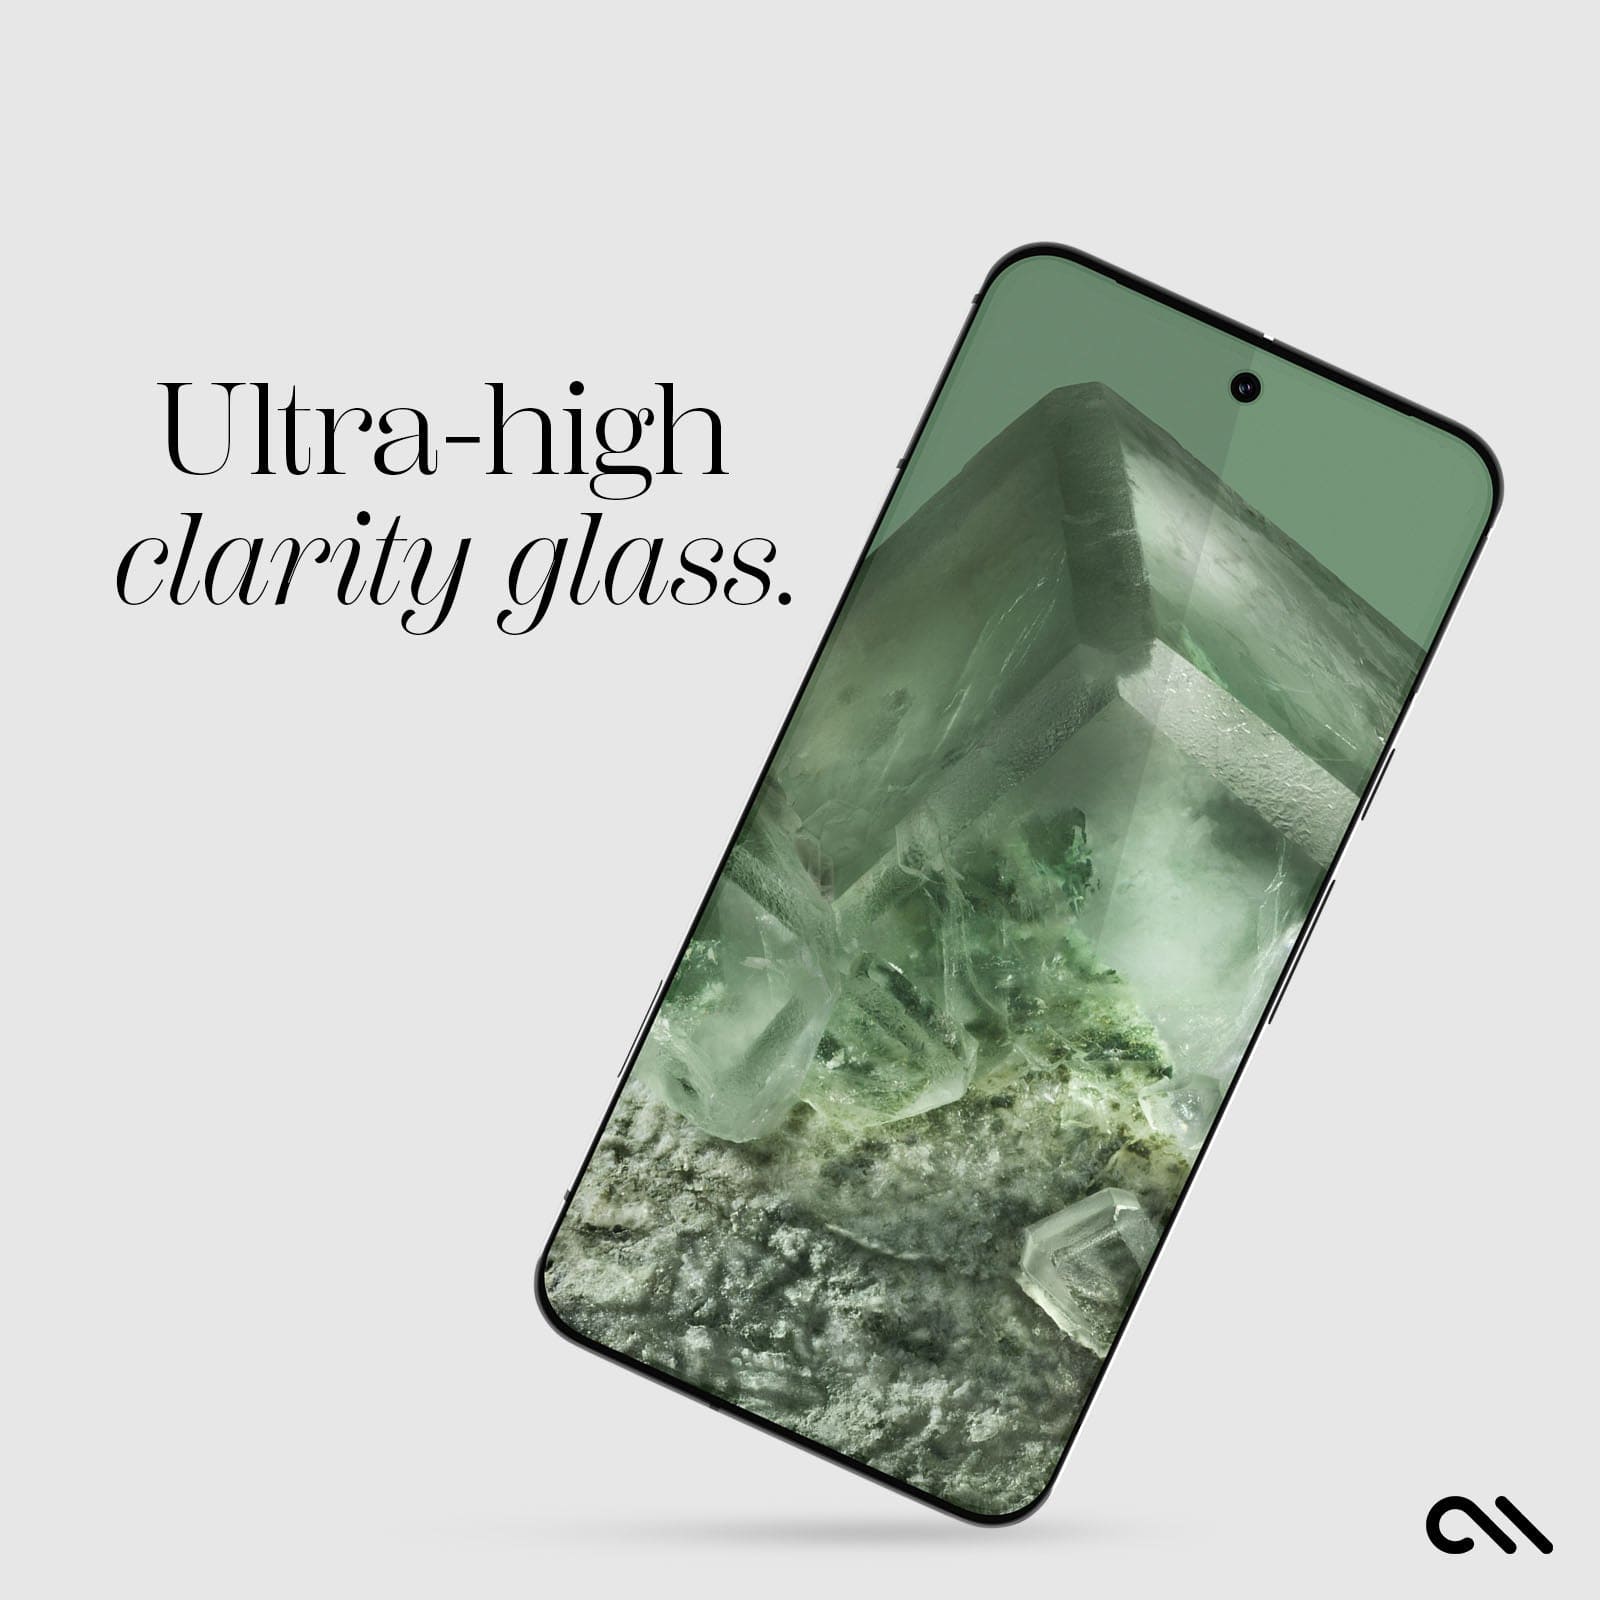 ULTR-HIGH CLARITY GLASS